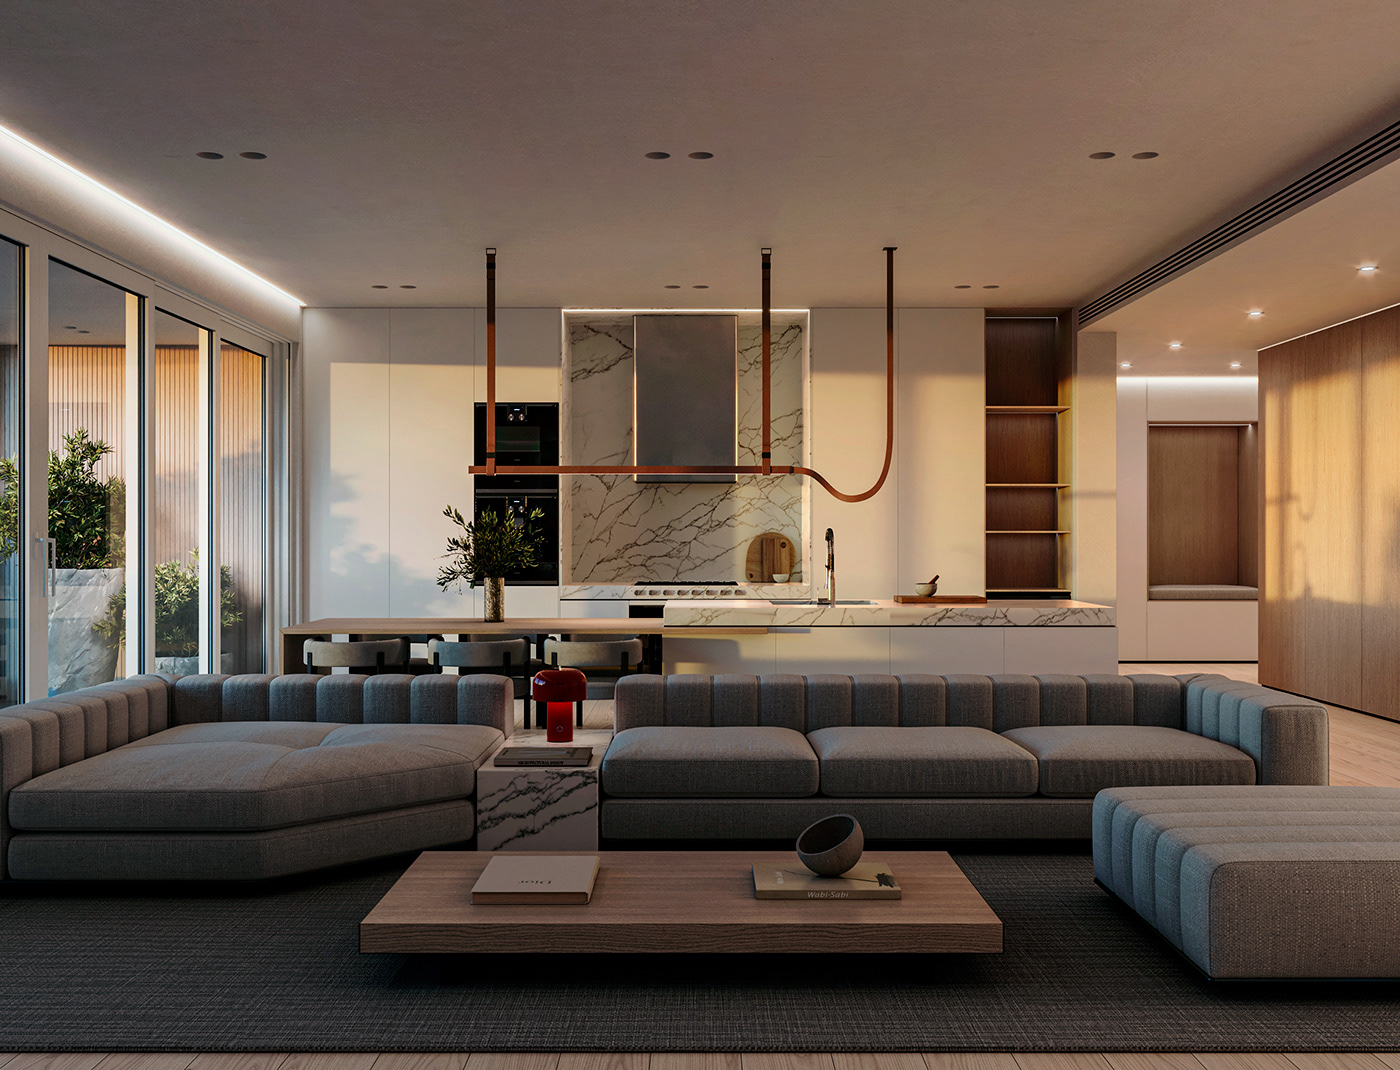 3ds max architecture archviz CGI corona render  interior design  Render visualization